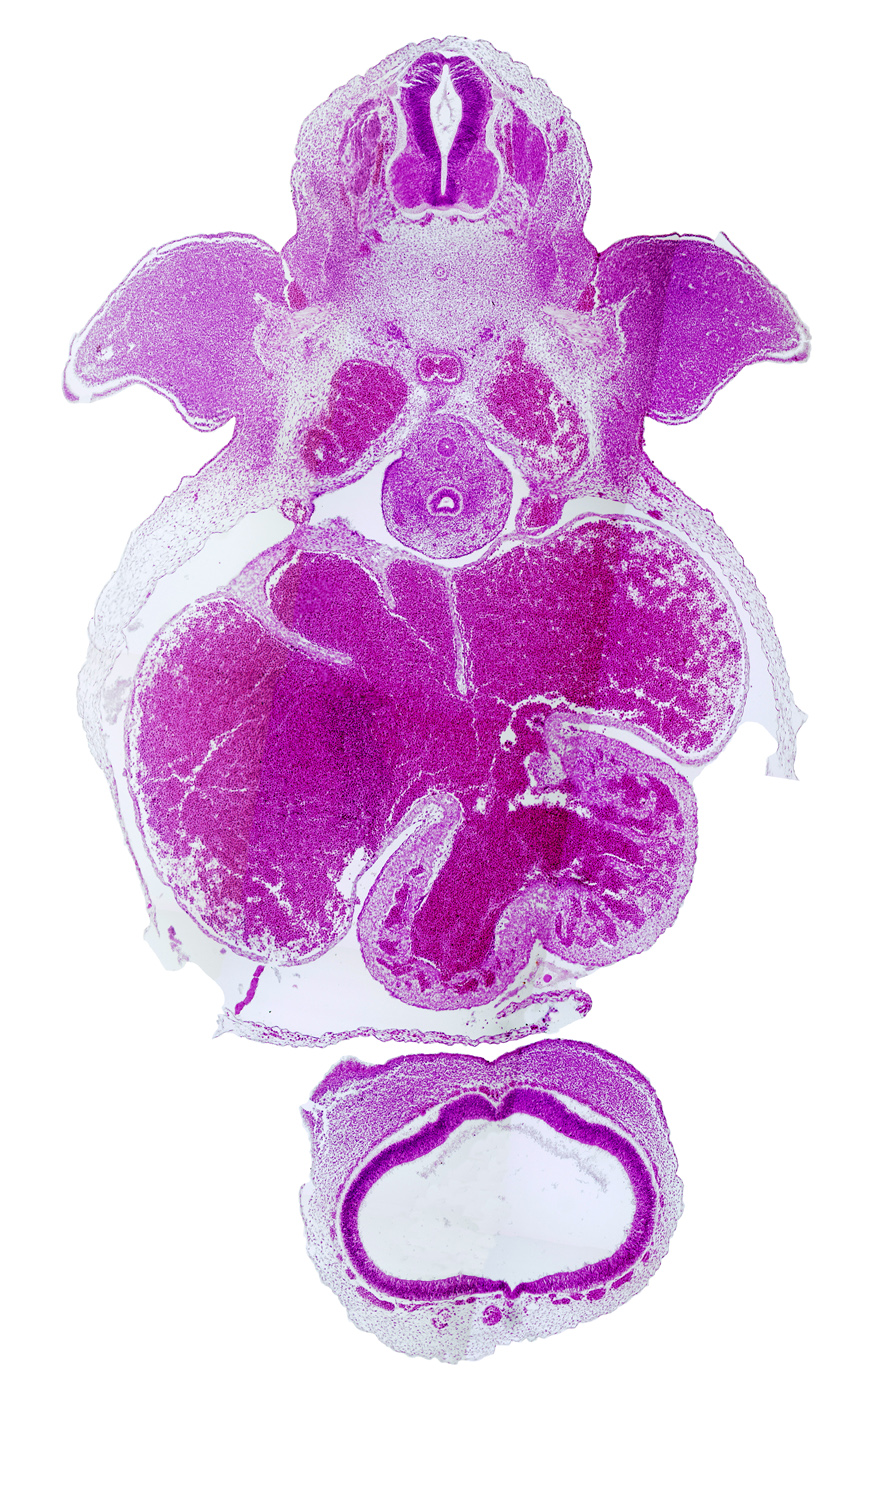 C-7 spinal ganglion, aorta, apical epidermal ridge, cerebral vesicle (primordial cerebral hemisphere), esophagus, frontonasal prominence, interventricular groove, lateral ventricle, left atrium, left common cardinal vein, left venous valve, left ventricle, musculi pectinati, notochord, postcardinal vein, primary interatrial foramen (foramen primum), primary interatrial septum (septum primum), right atrium, right venous valve, right ventricle, sinus venosus, telencephalon medium, trachea, upper limb